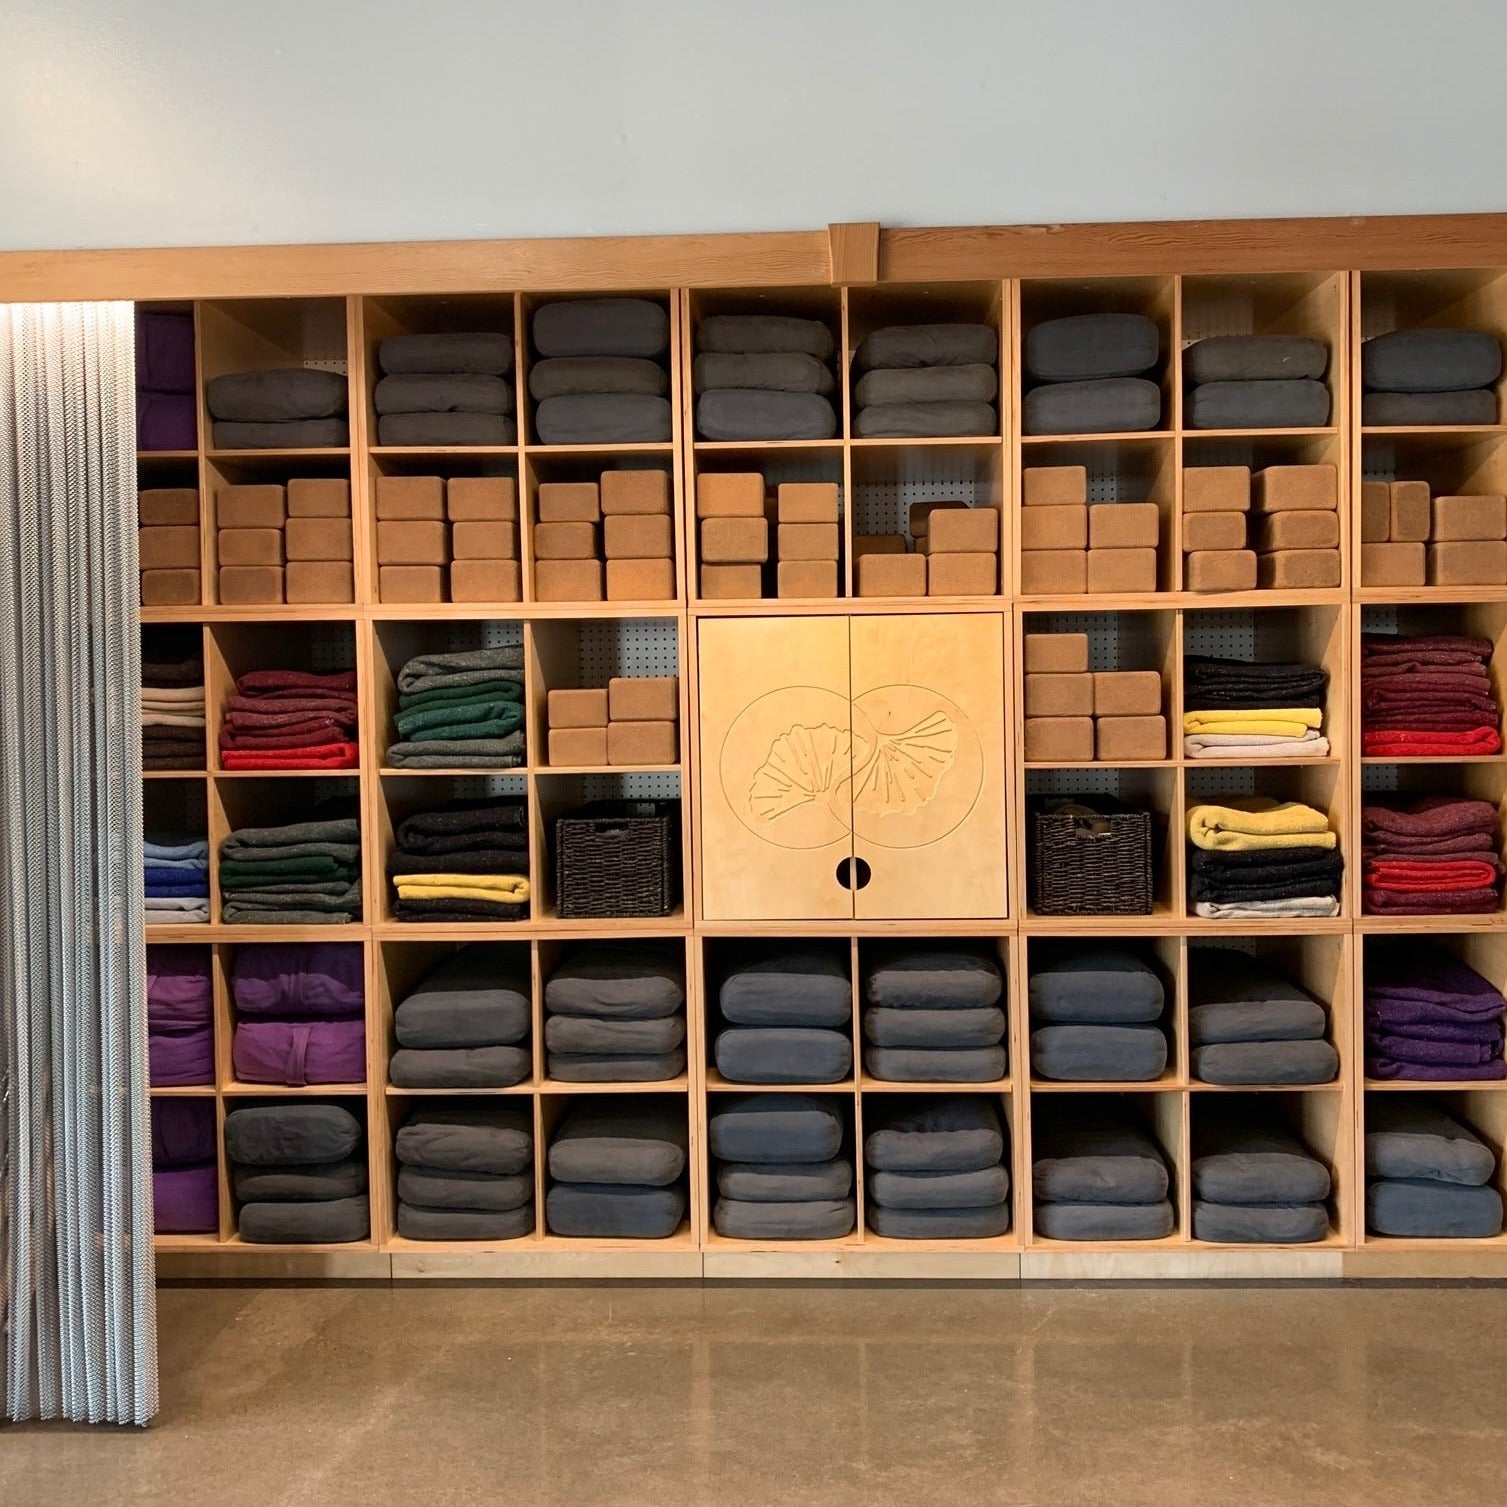 Shelves of mats, blocks and bolsters in yoga studio stock photo - OFFSET